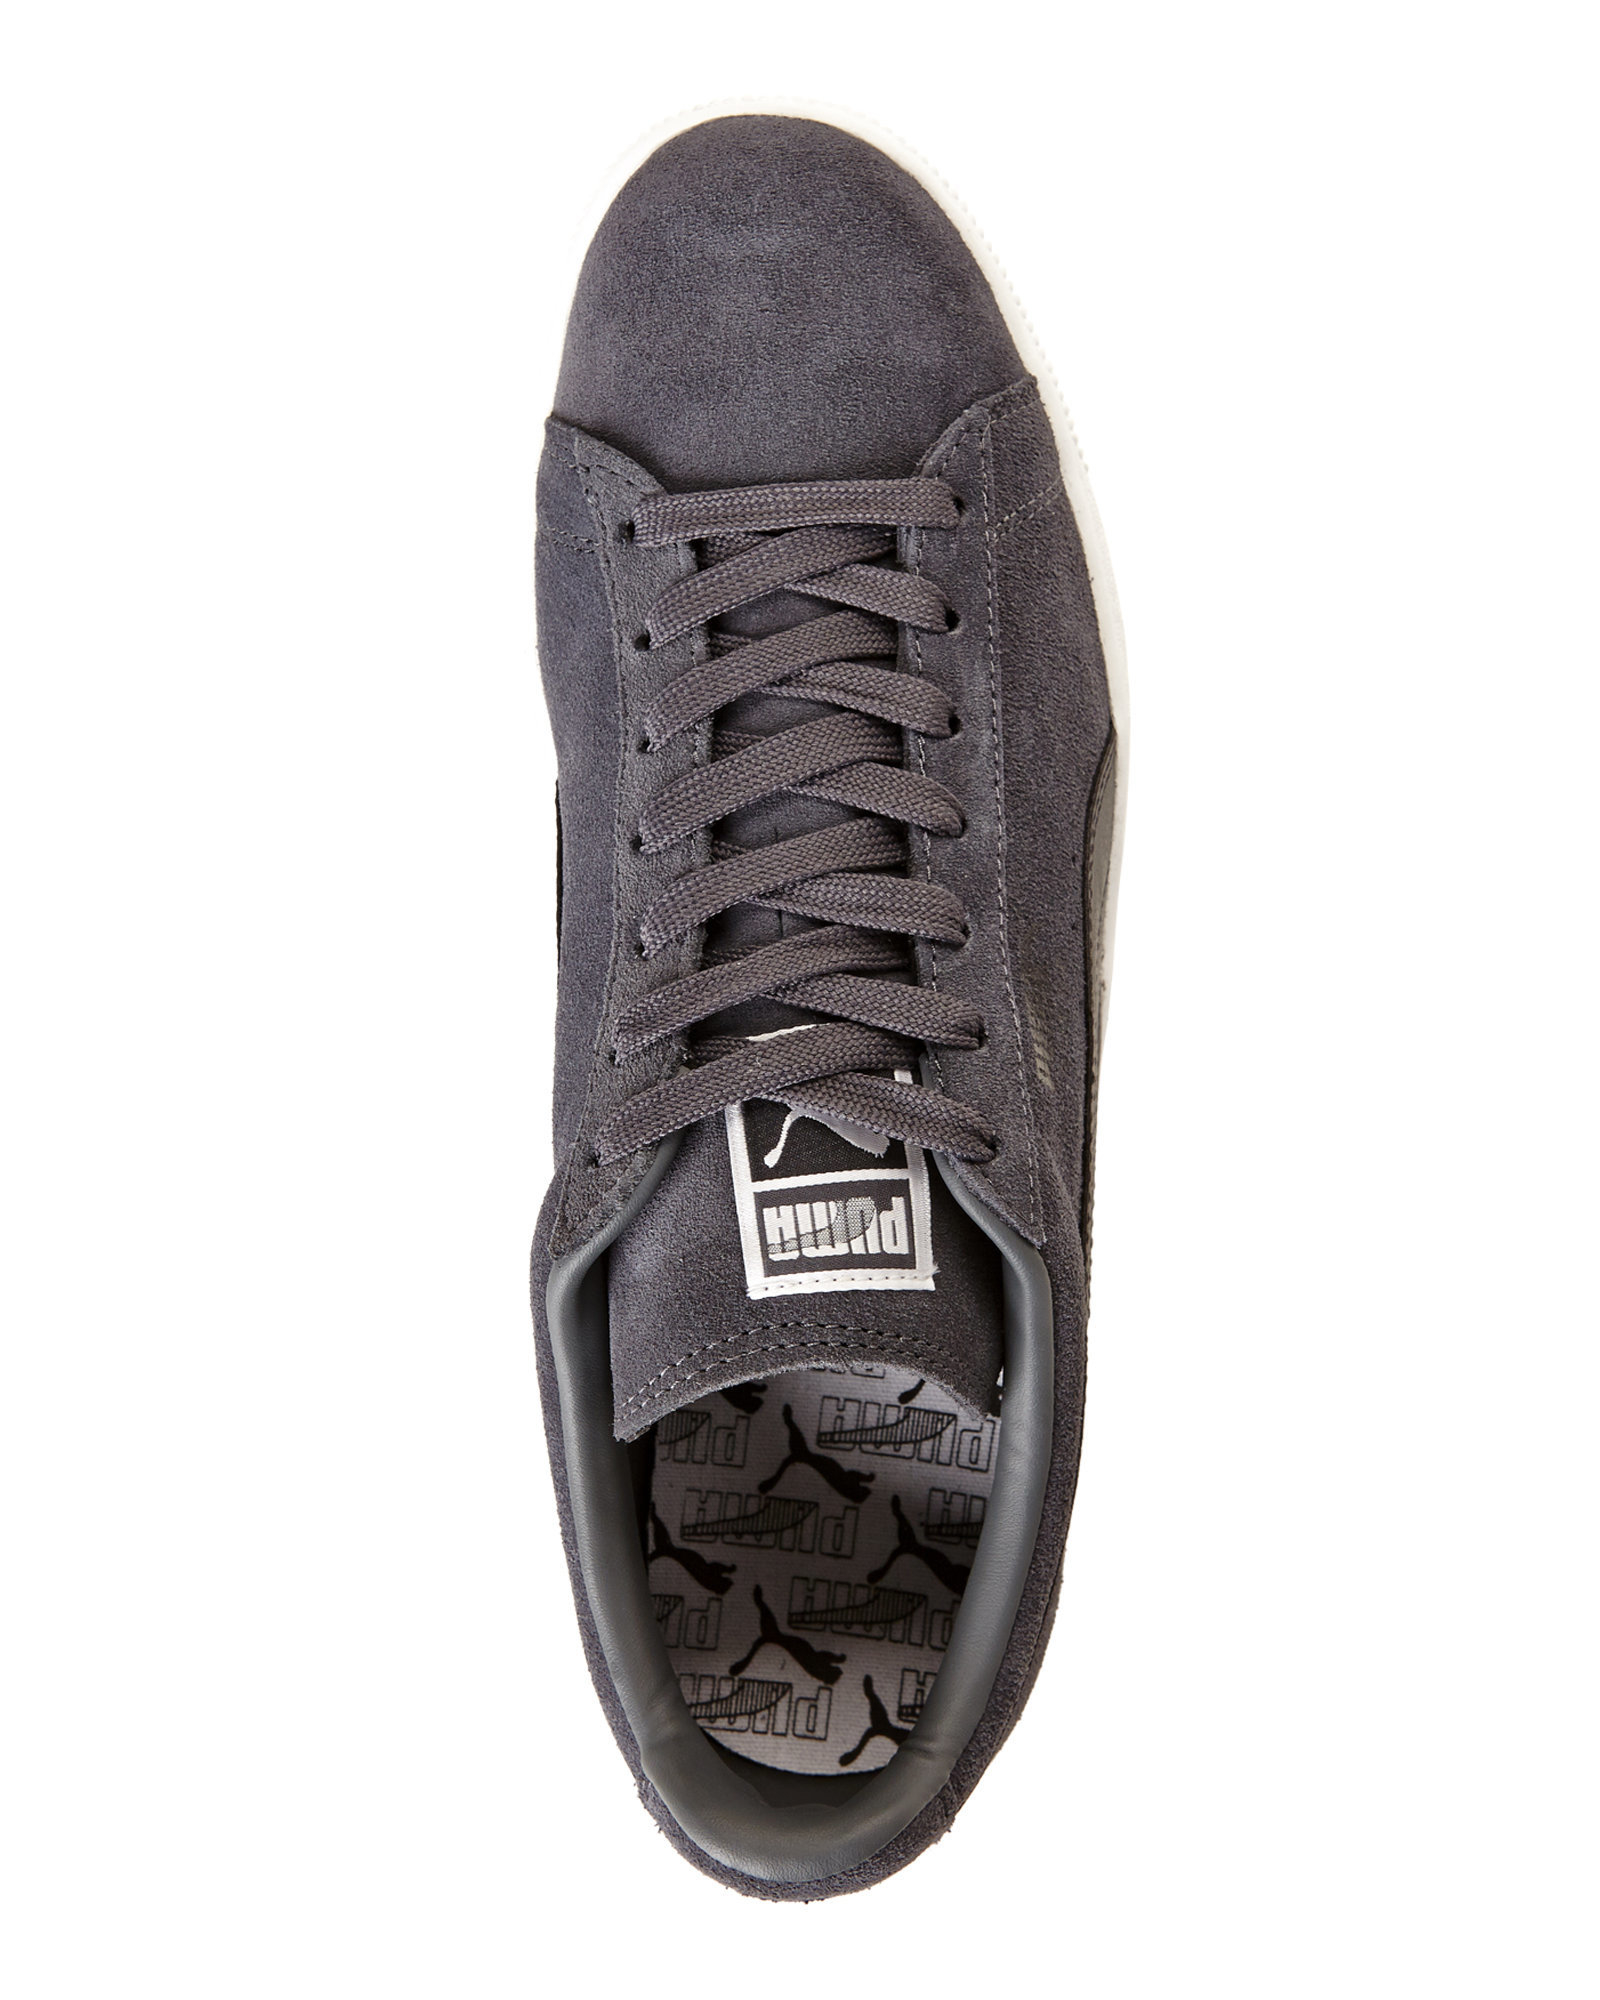 Lyst - PUMA Dark Shadow & Black Suede Classic Sneakers in Black for Men